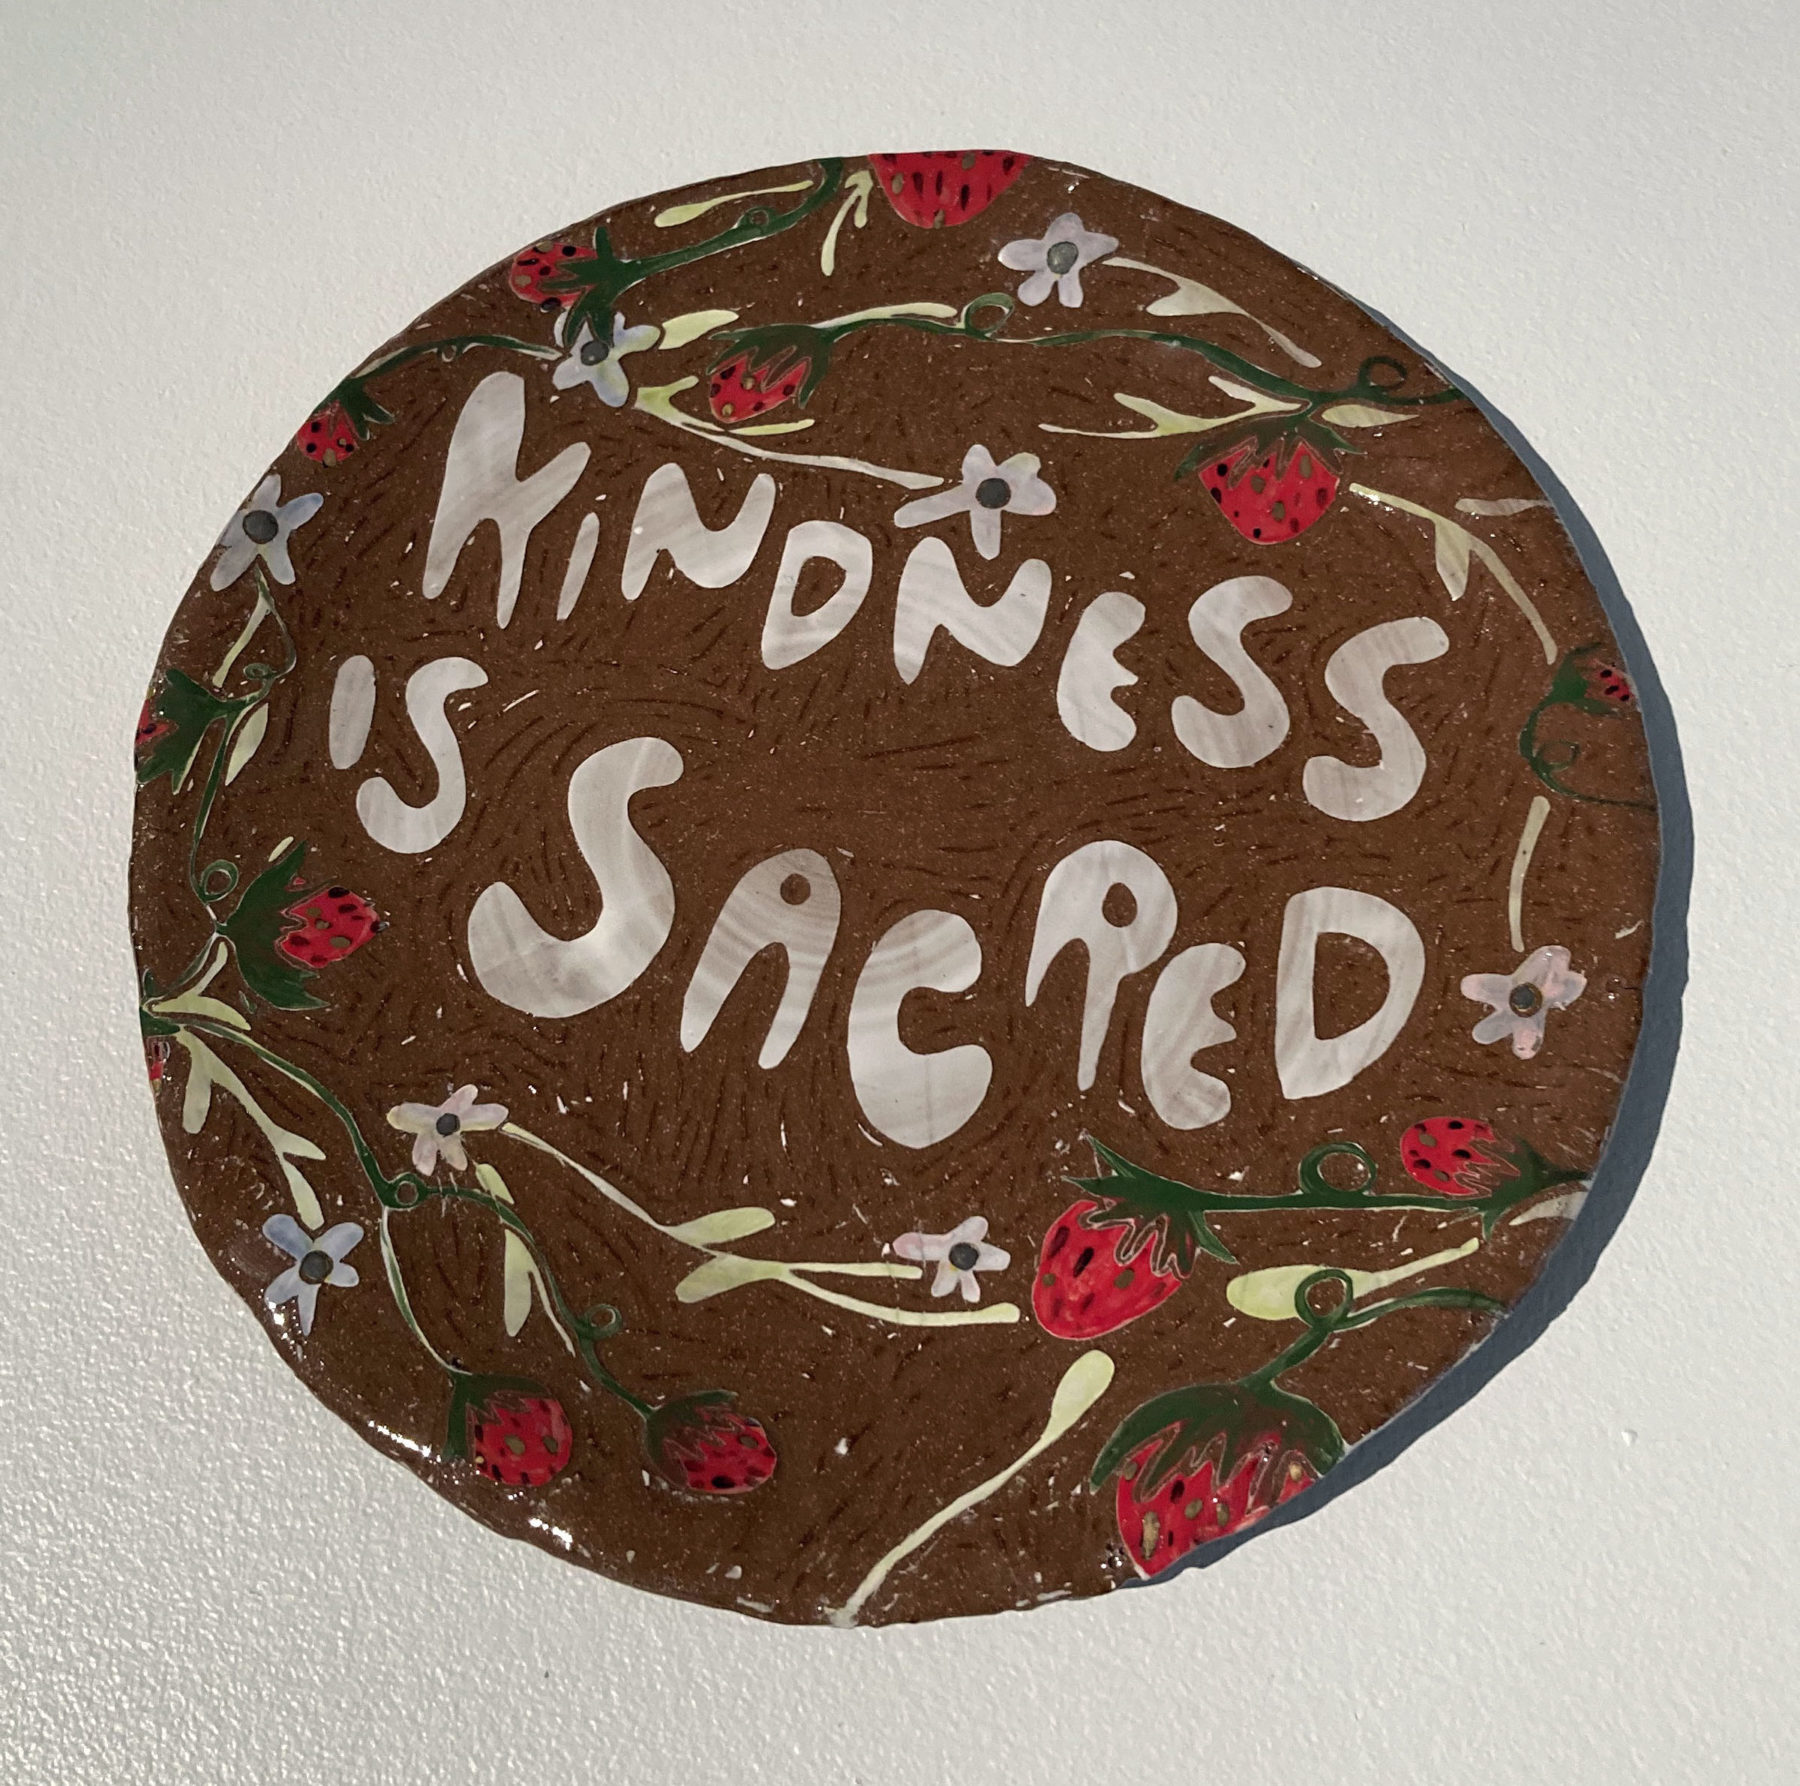 Kindness is Sacred